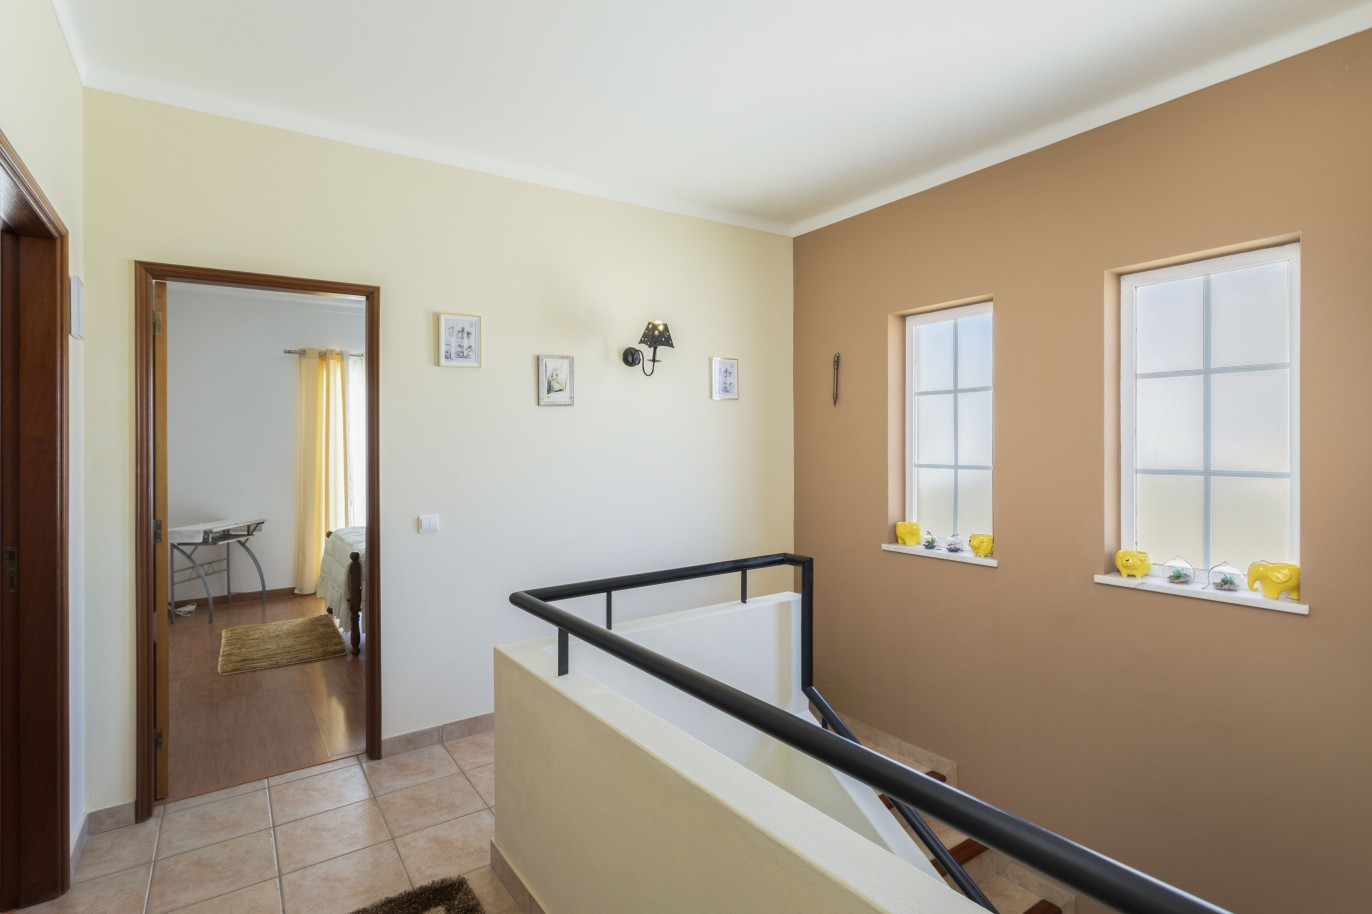 Villa de 3 chambres à vendre à Porto de Mós, Algarve_233233